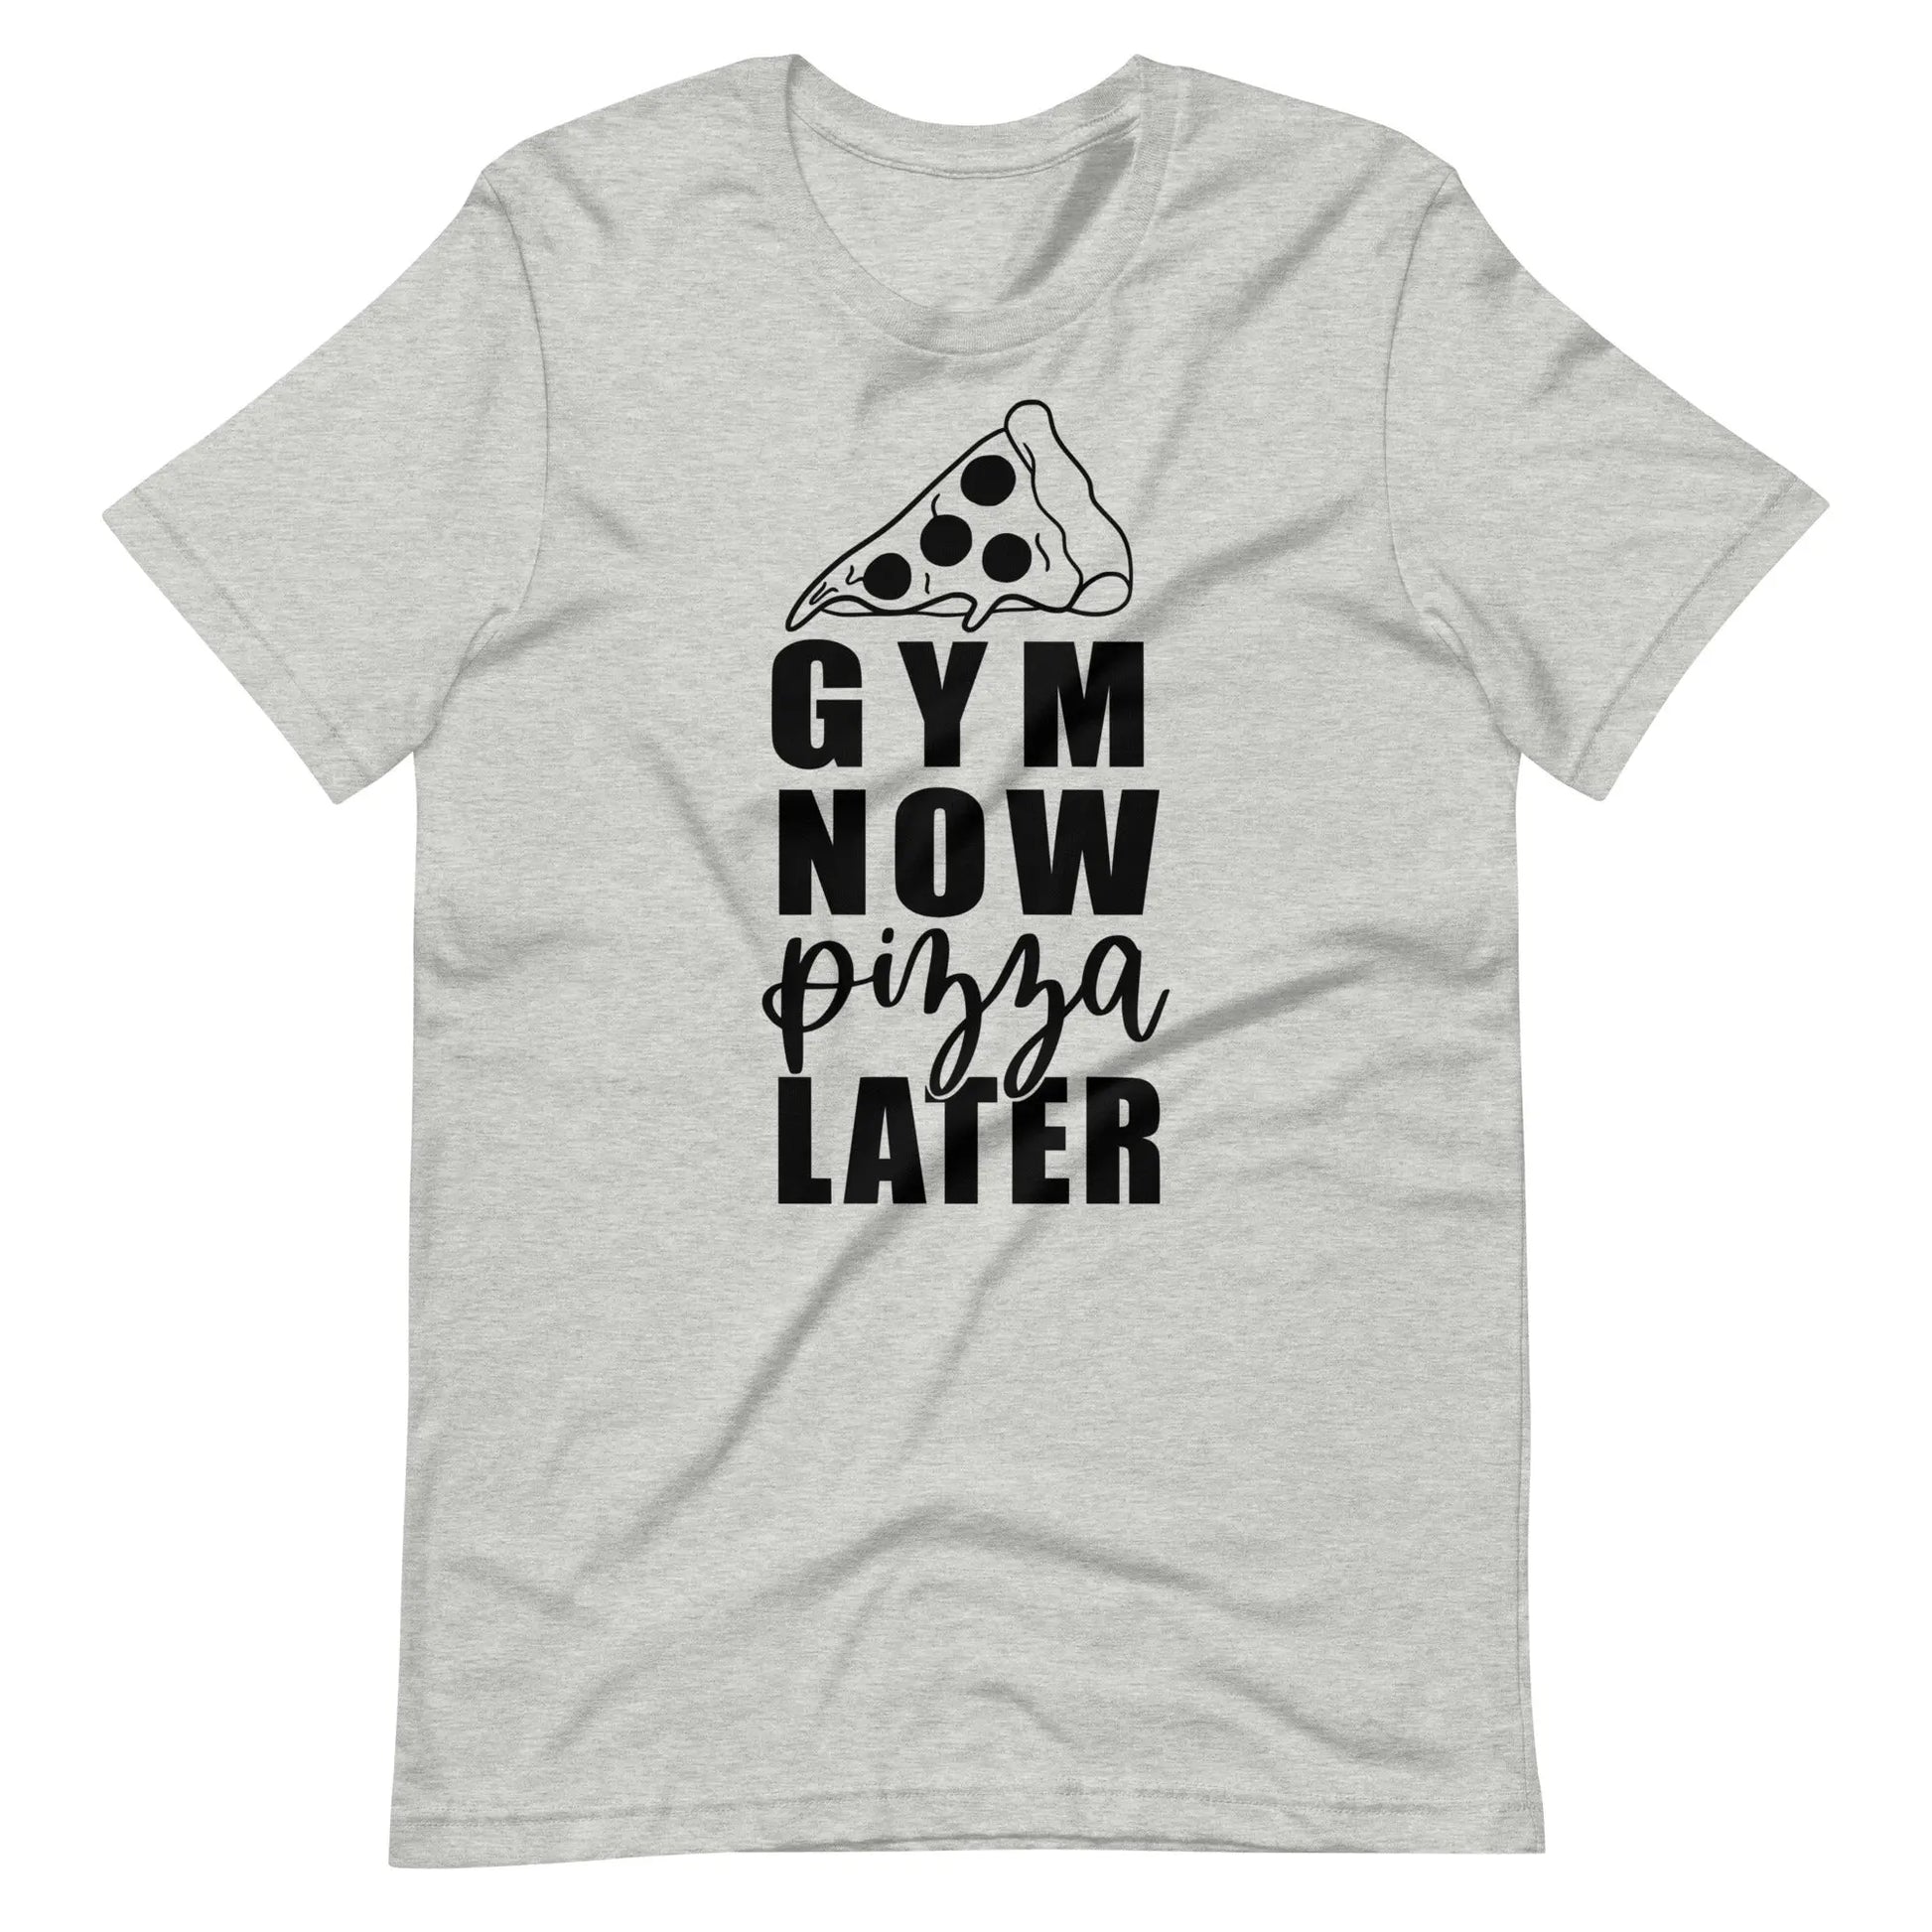 Gym Motivation T-Shirt | The Workout Inspiration |Gym Now Pizza Later Tee The Workout Inspiration